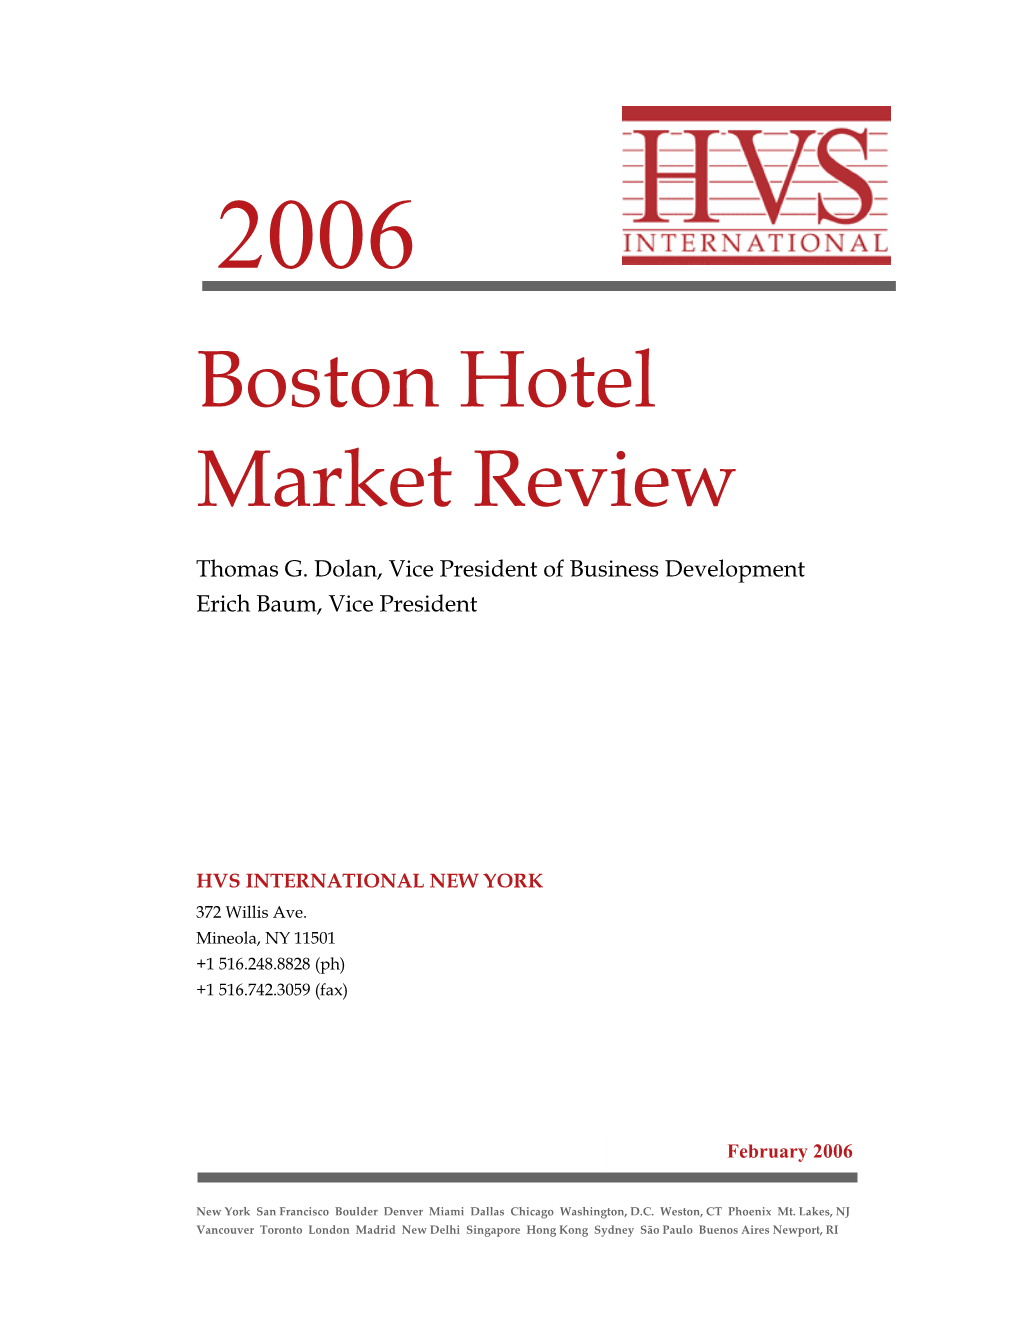 Boston Hotel Market Review